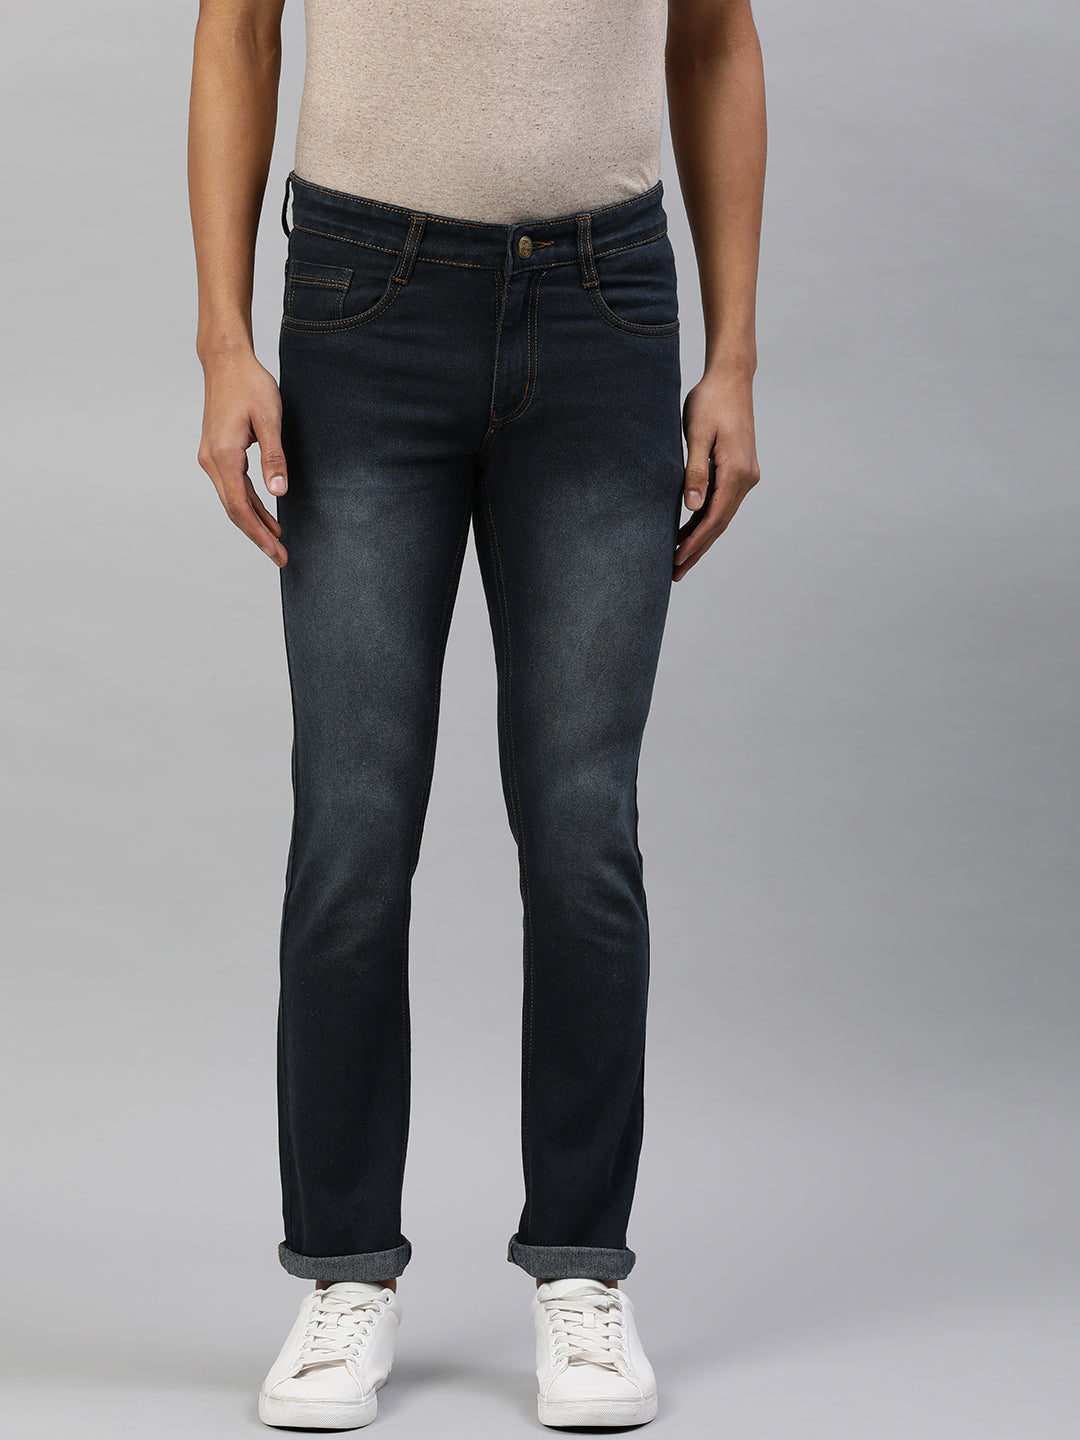 Men's Dark Grey Slim Fit Washed Jeans Stretchable